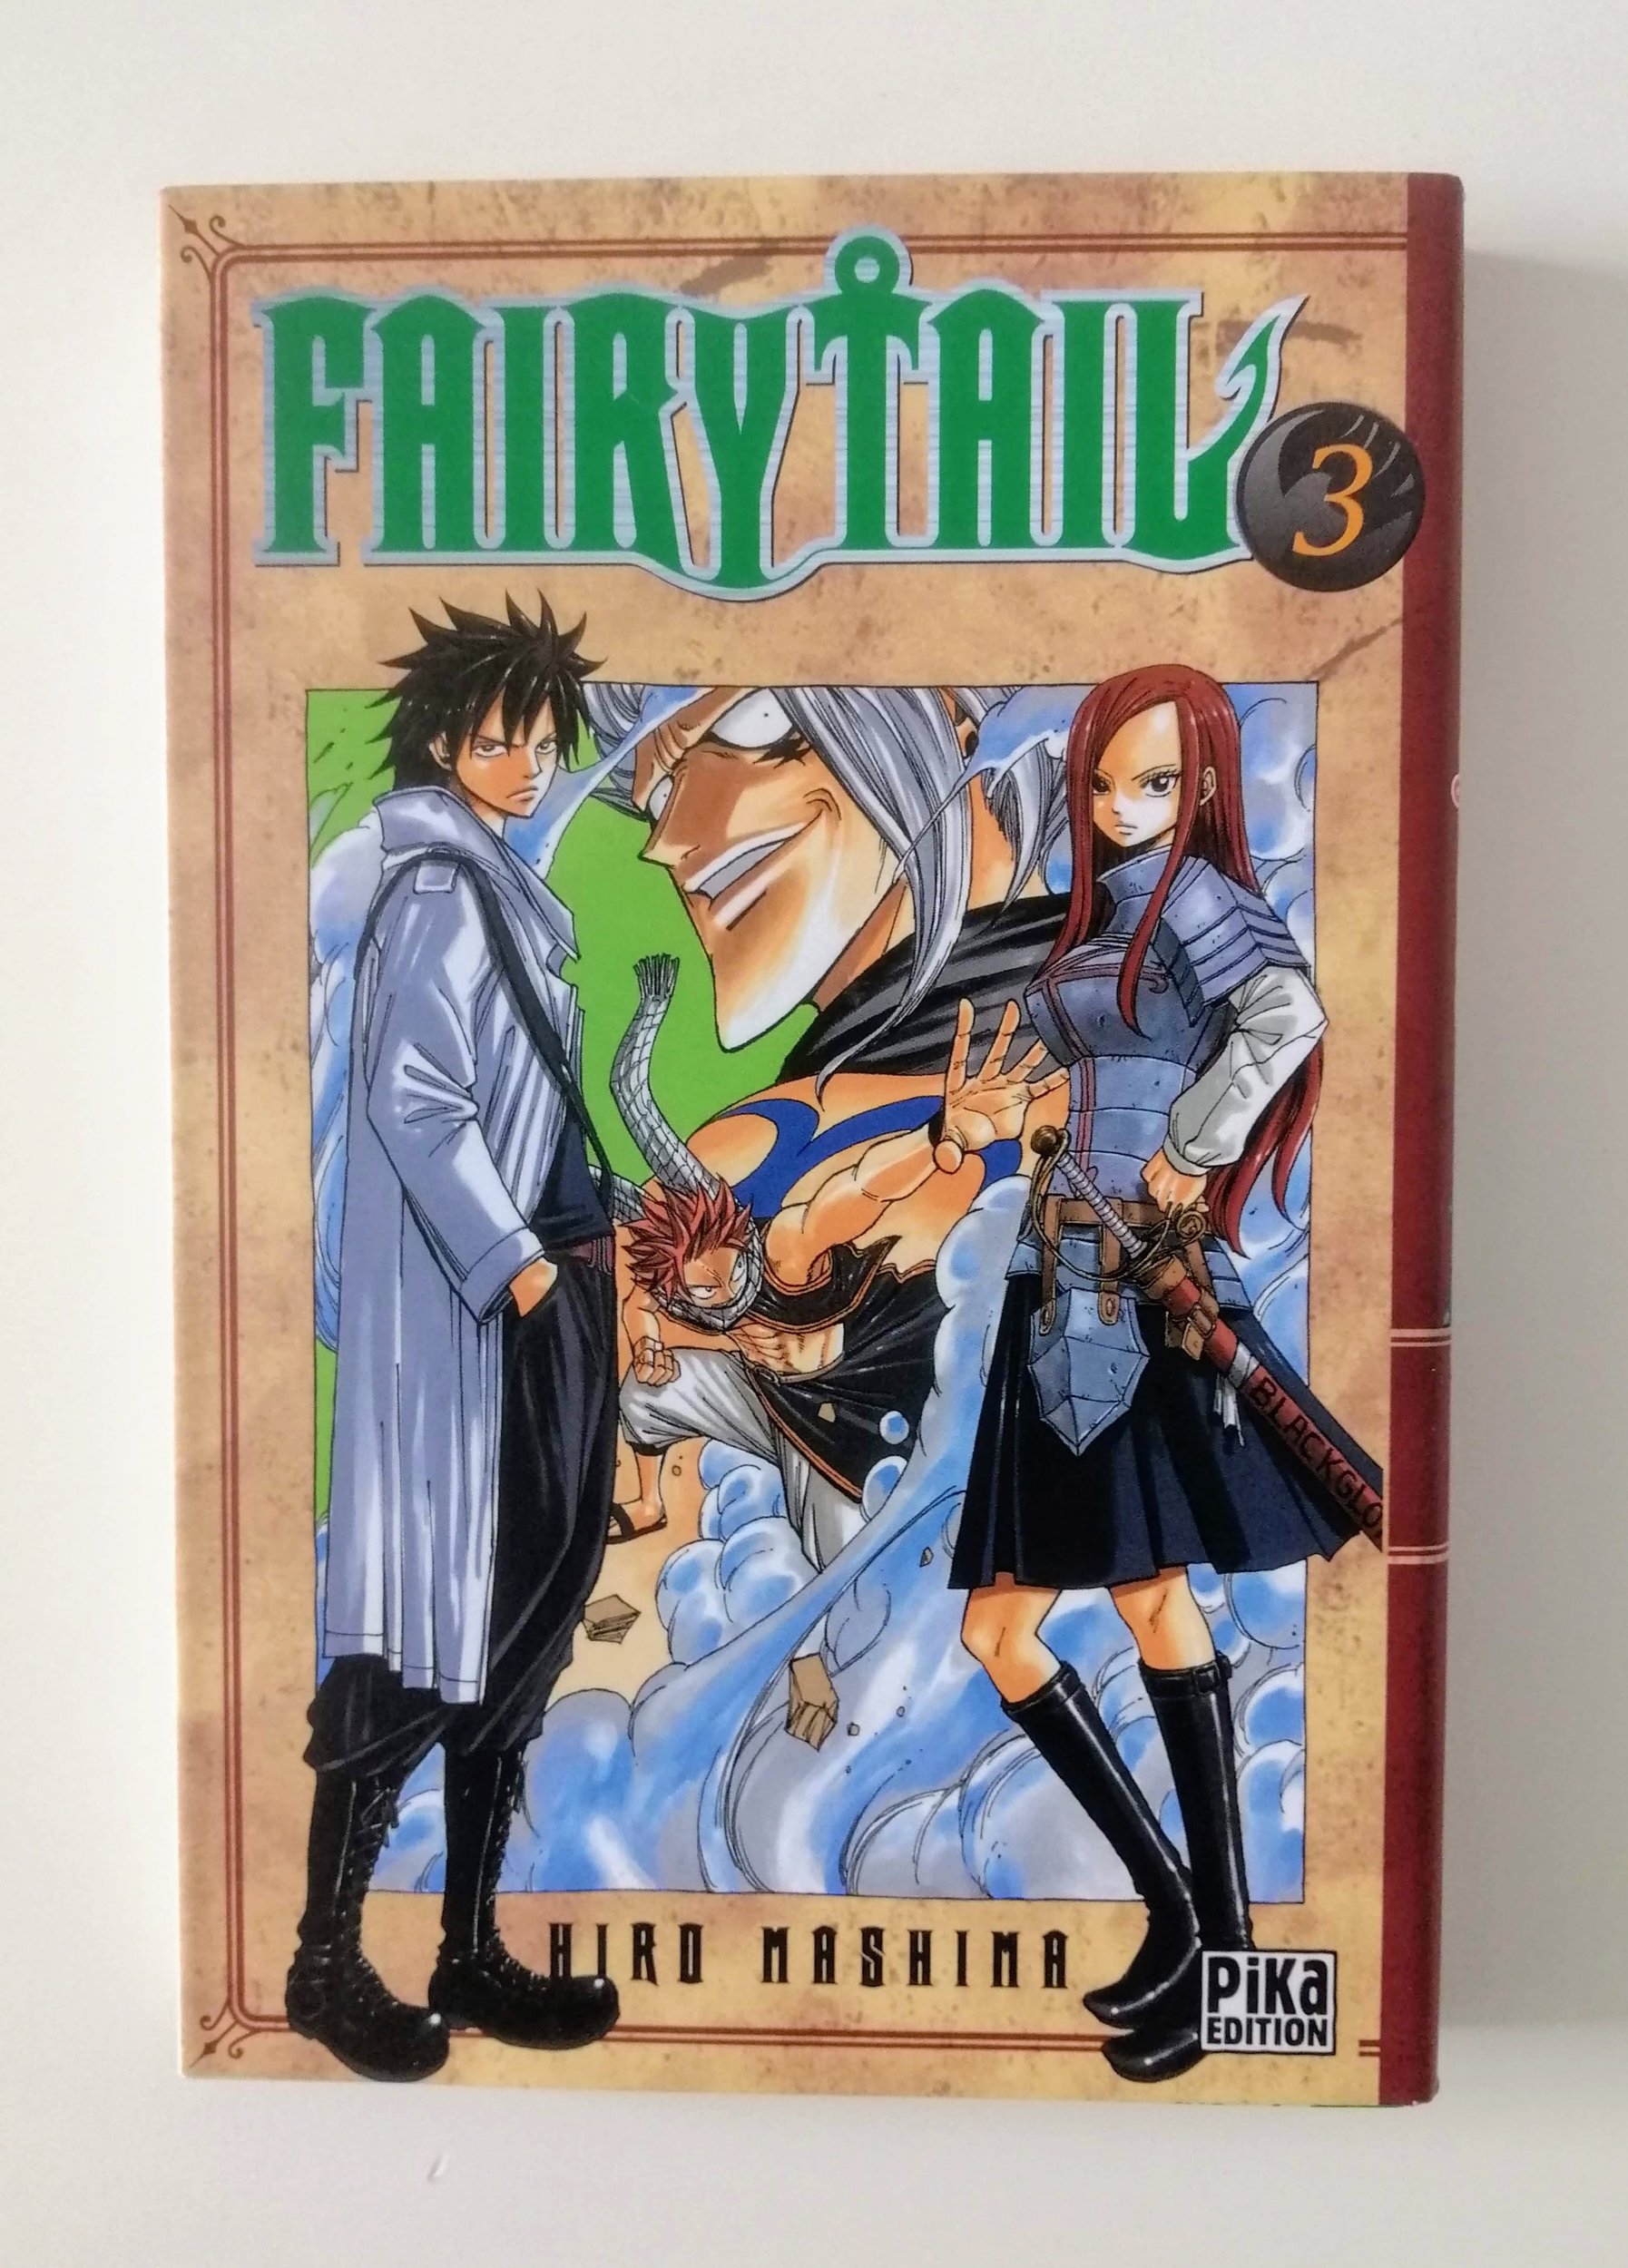 Fairy Tail 3 (Hiro Mashima)